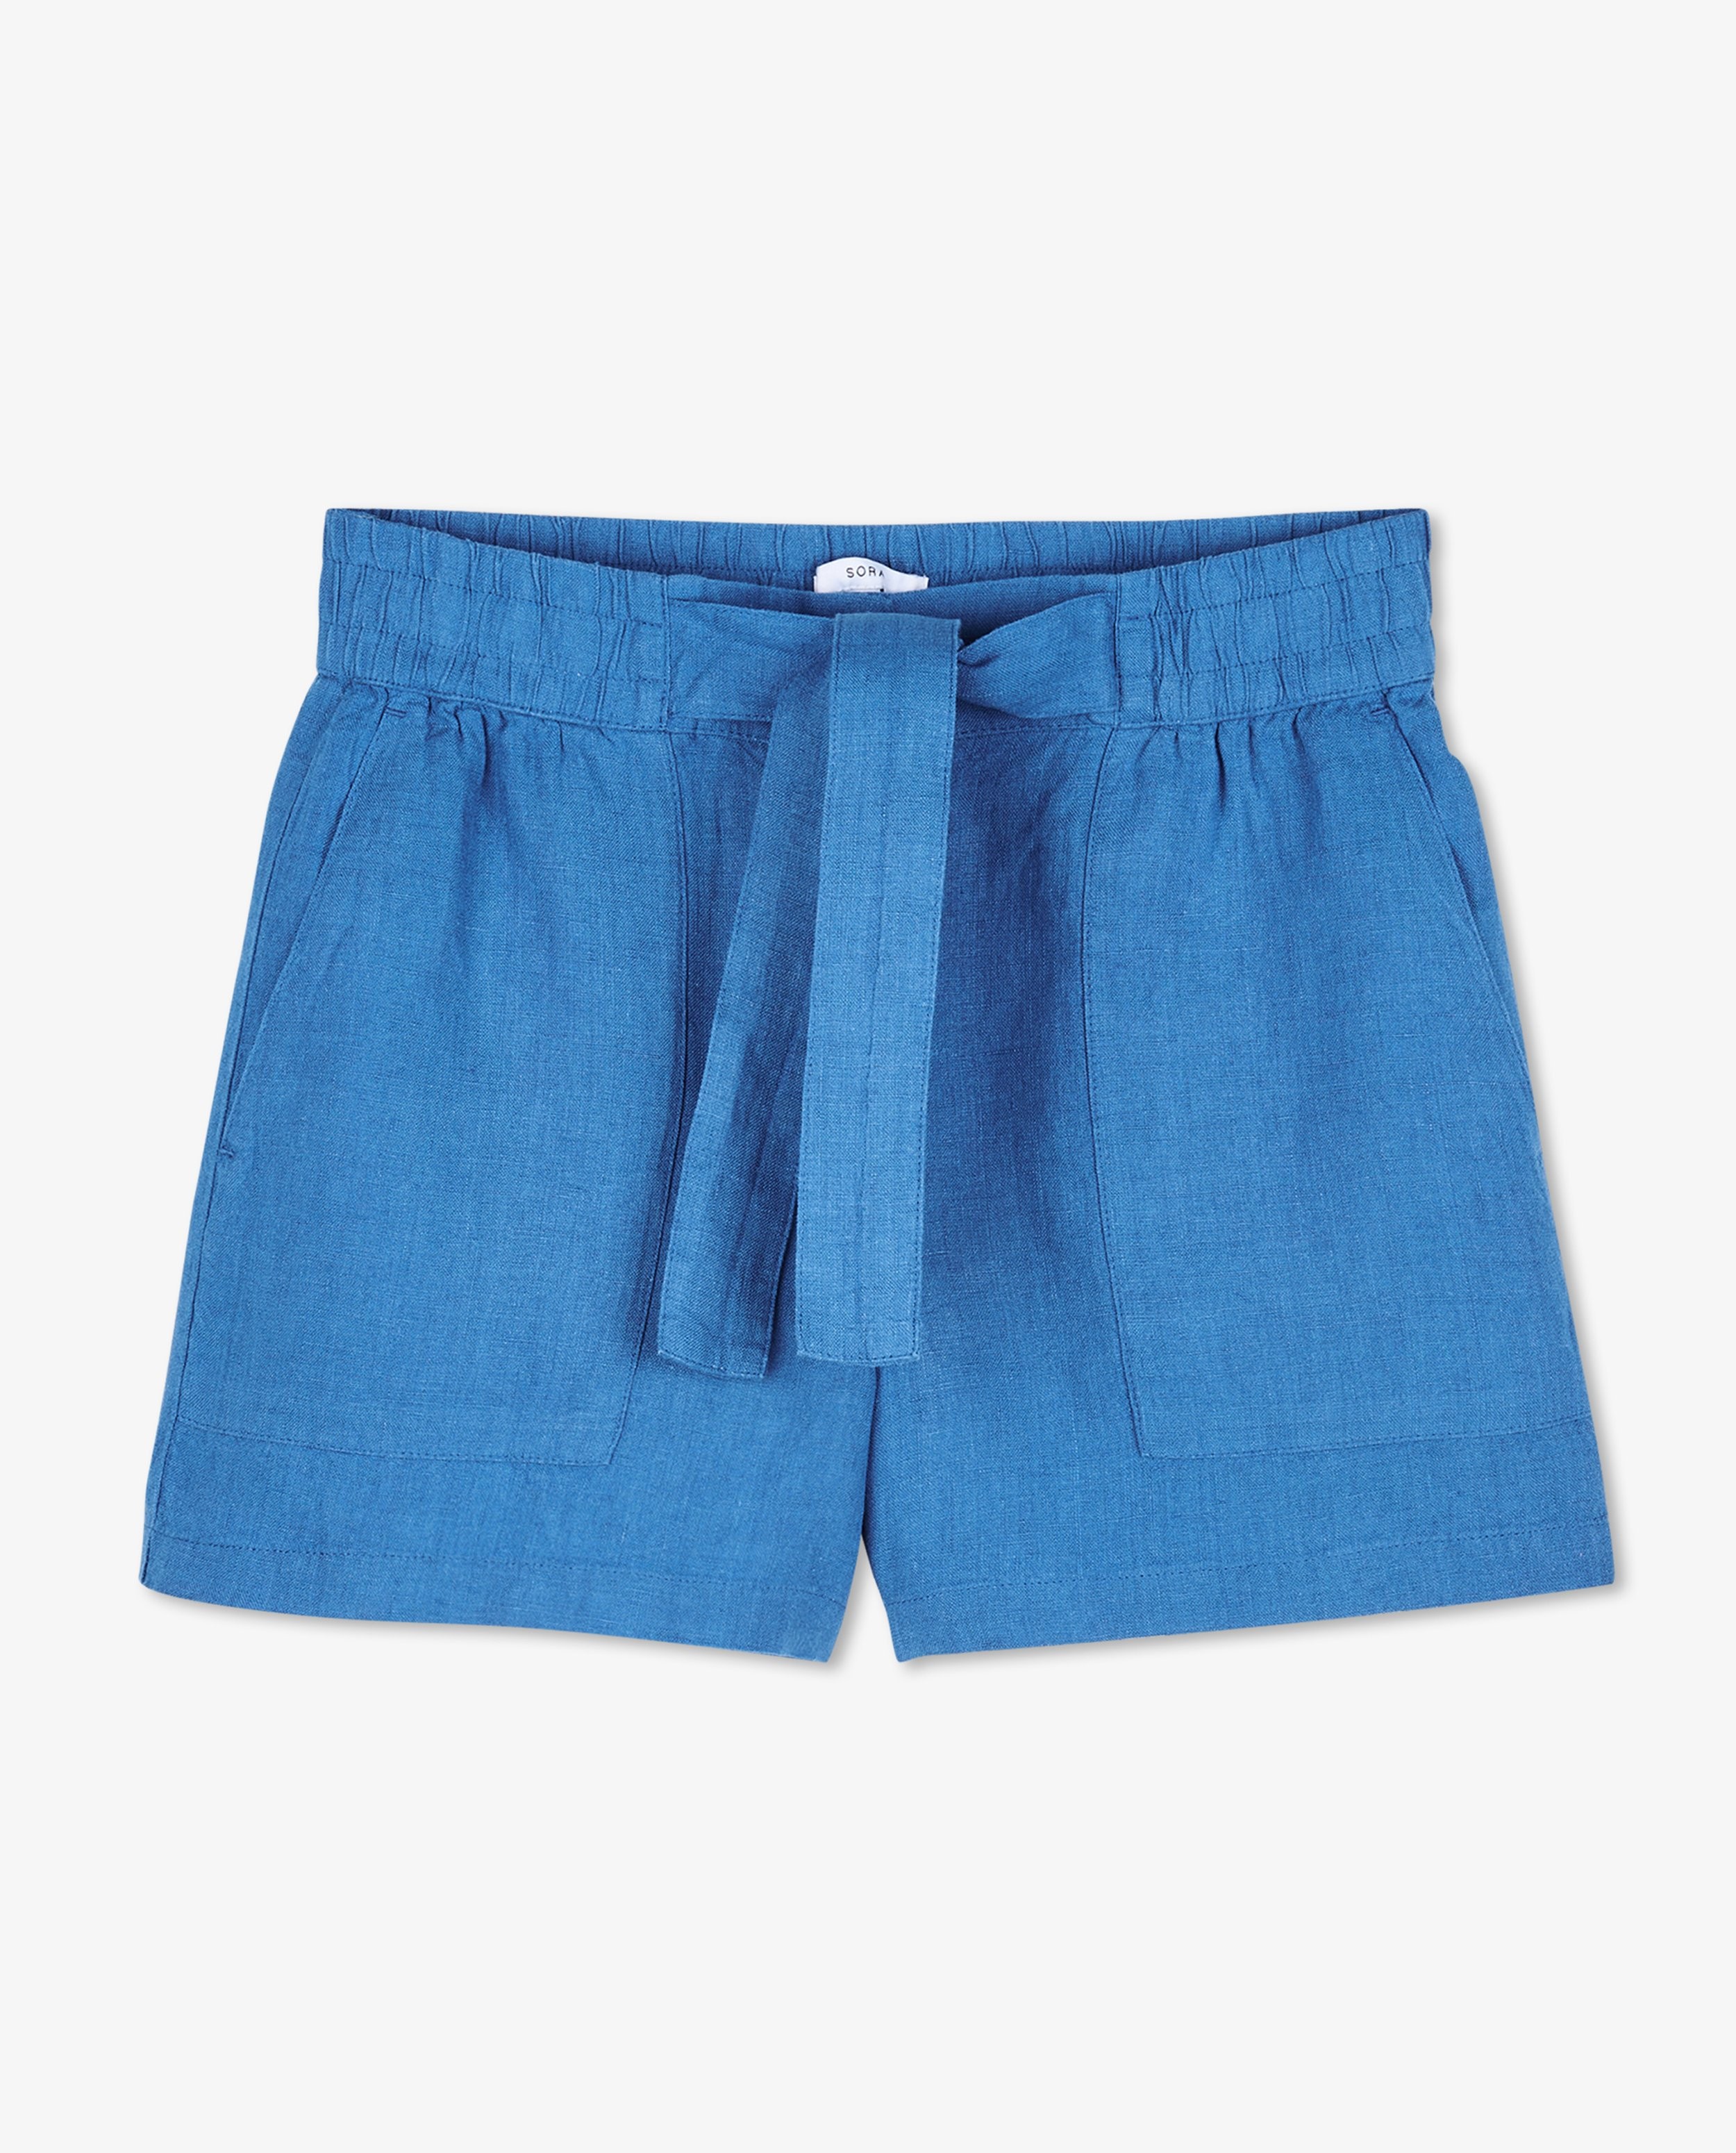 Shorts - Short bleu en lin